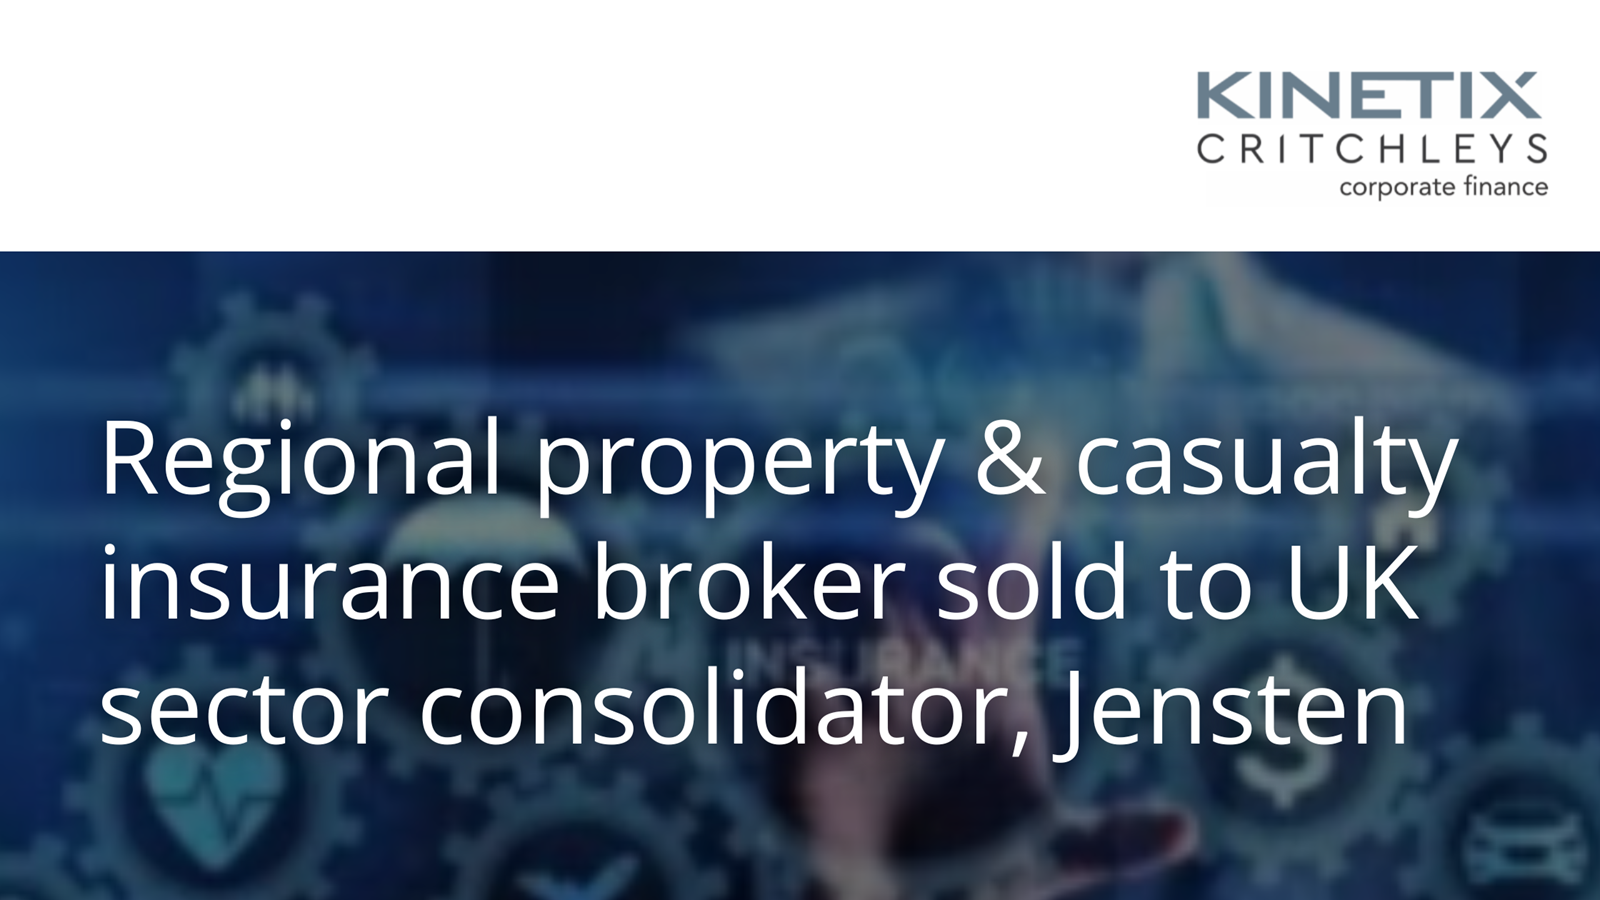 Regional property & casualty insurance broker sold to UK sector consolidator, Jensten